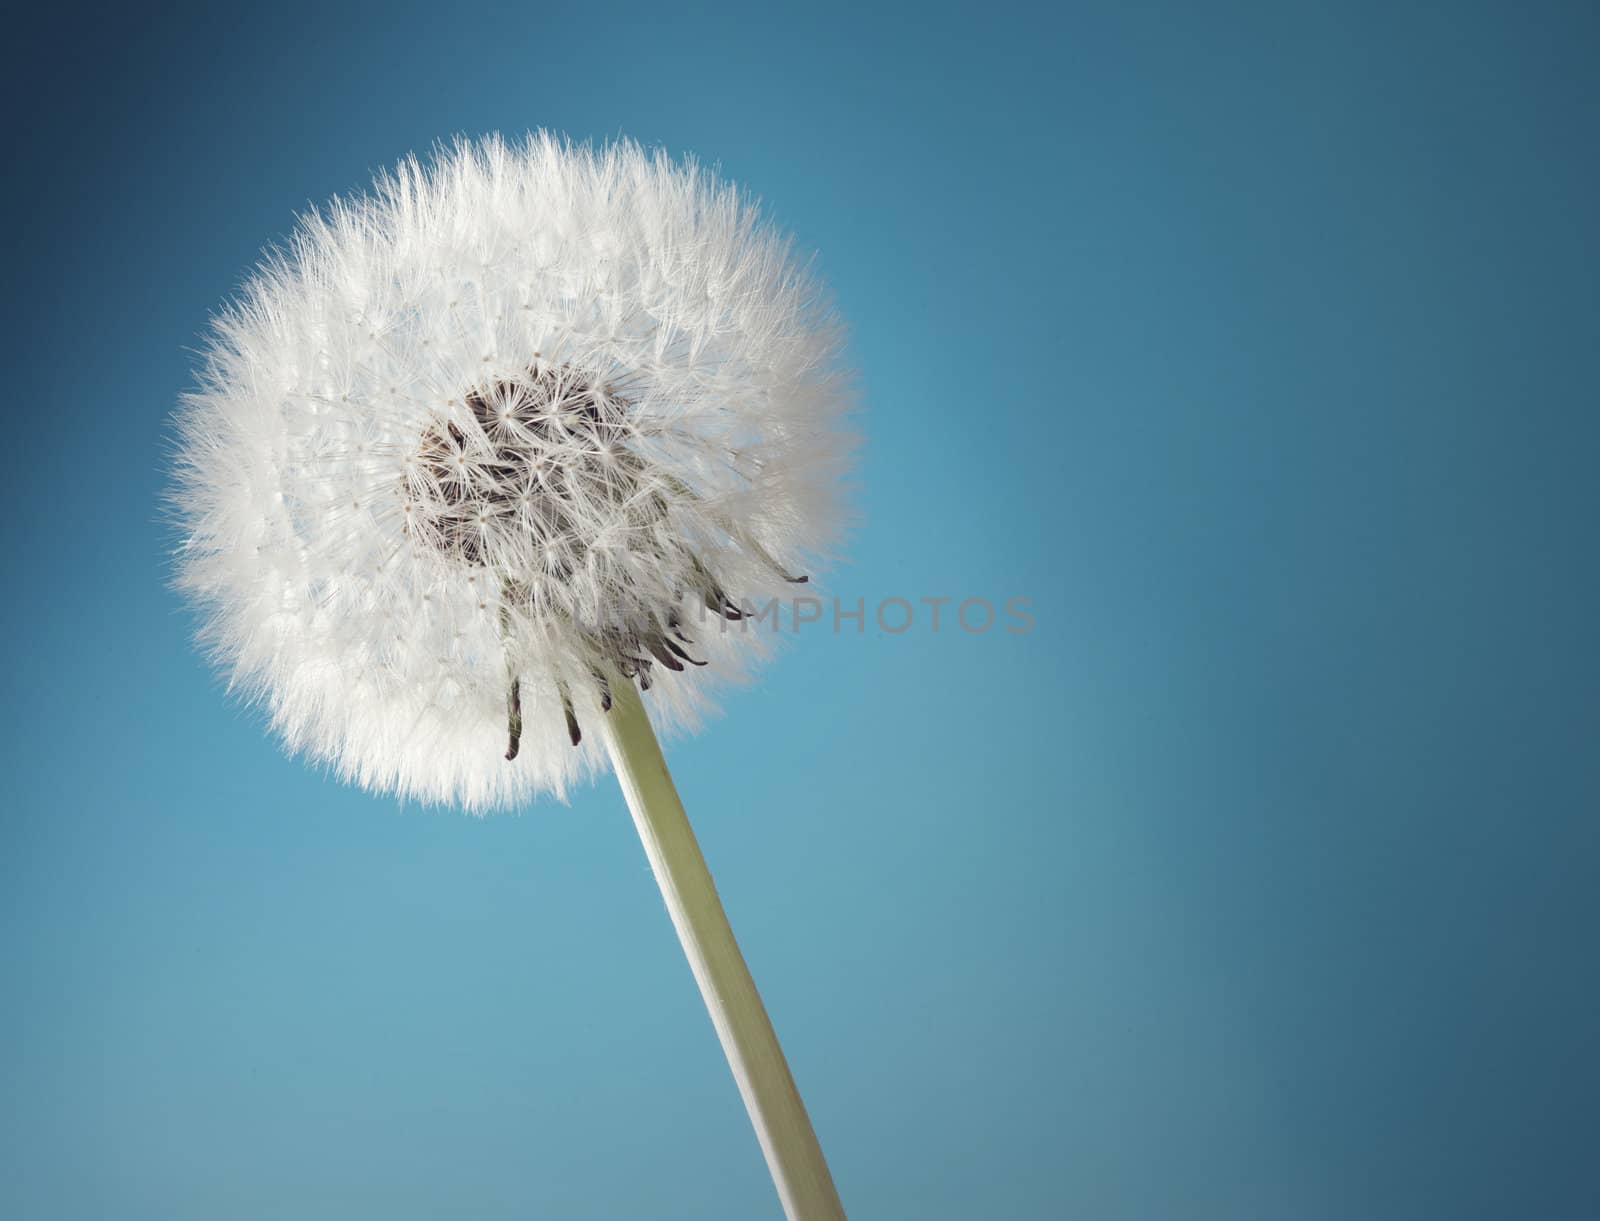 Close-up of a dandelion against a blue background